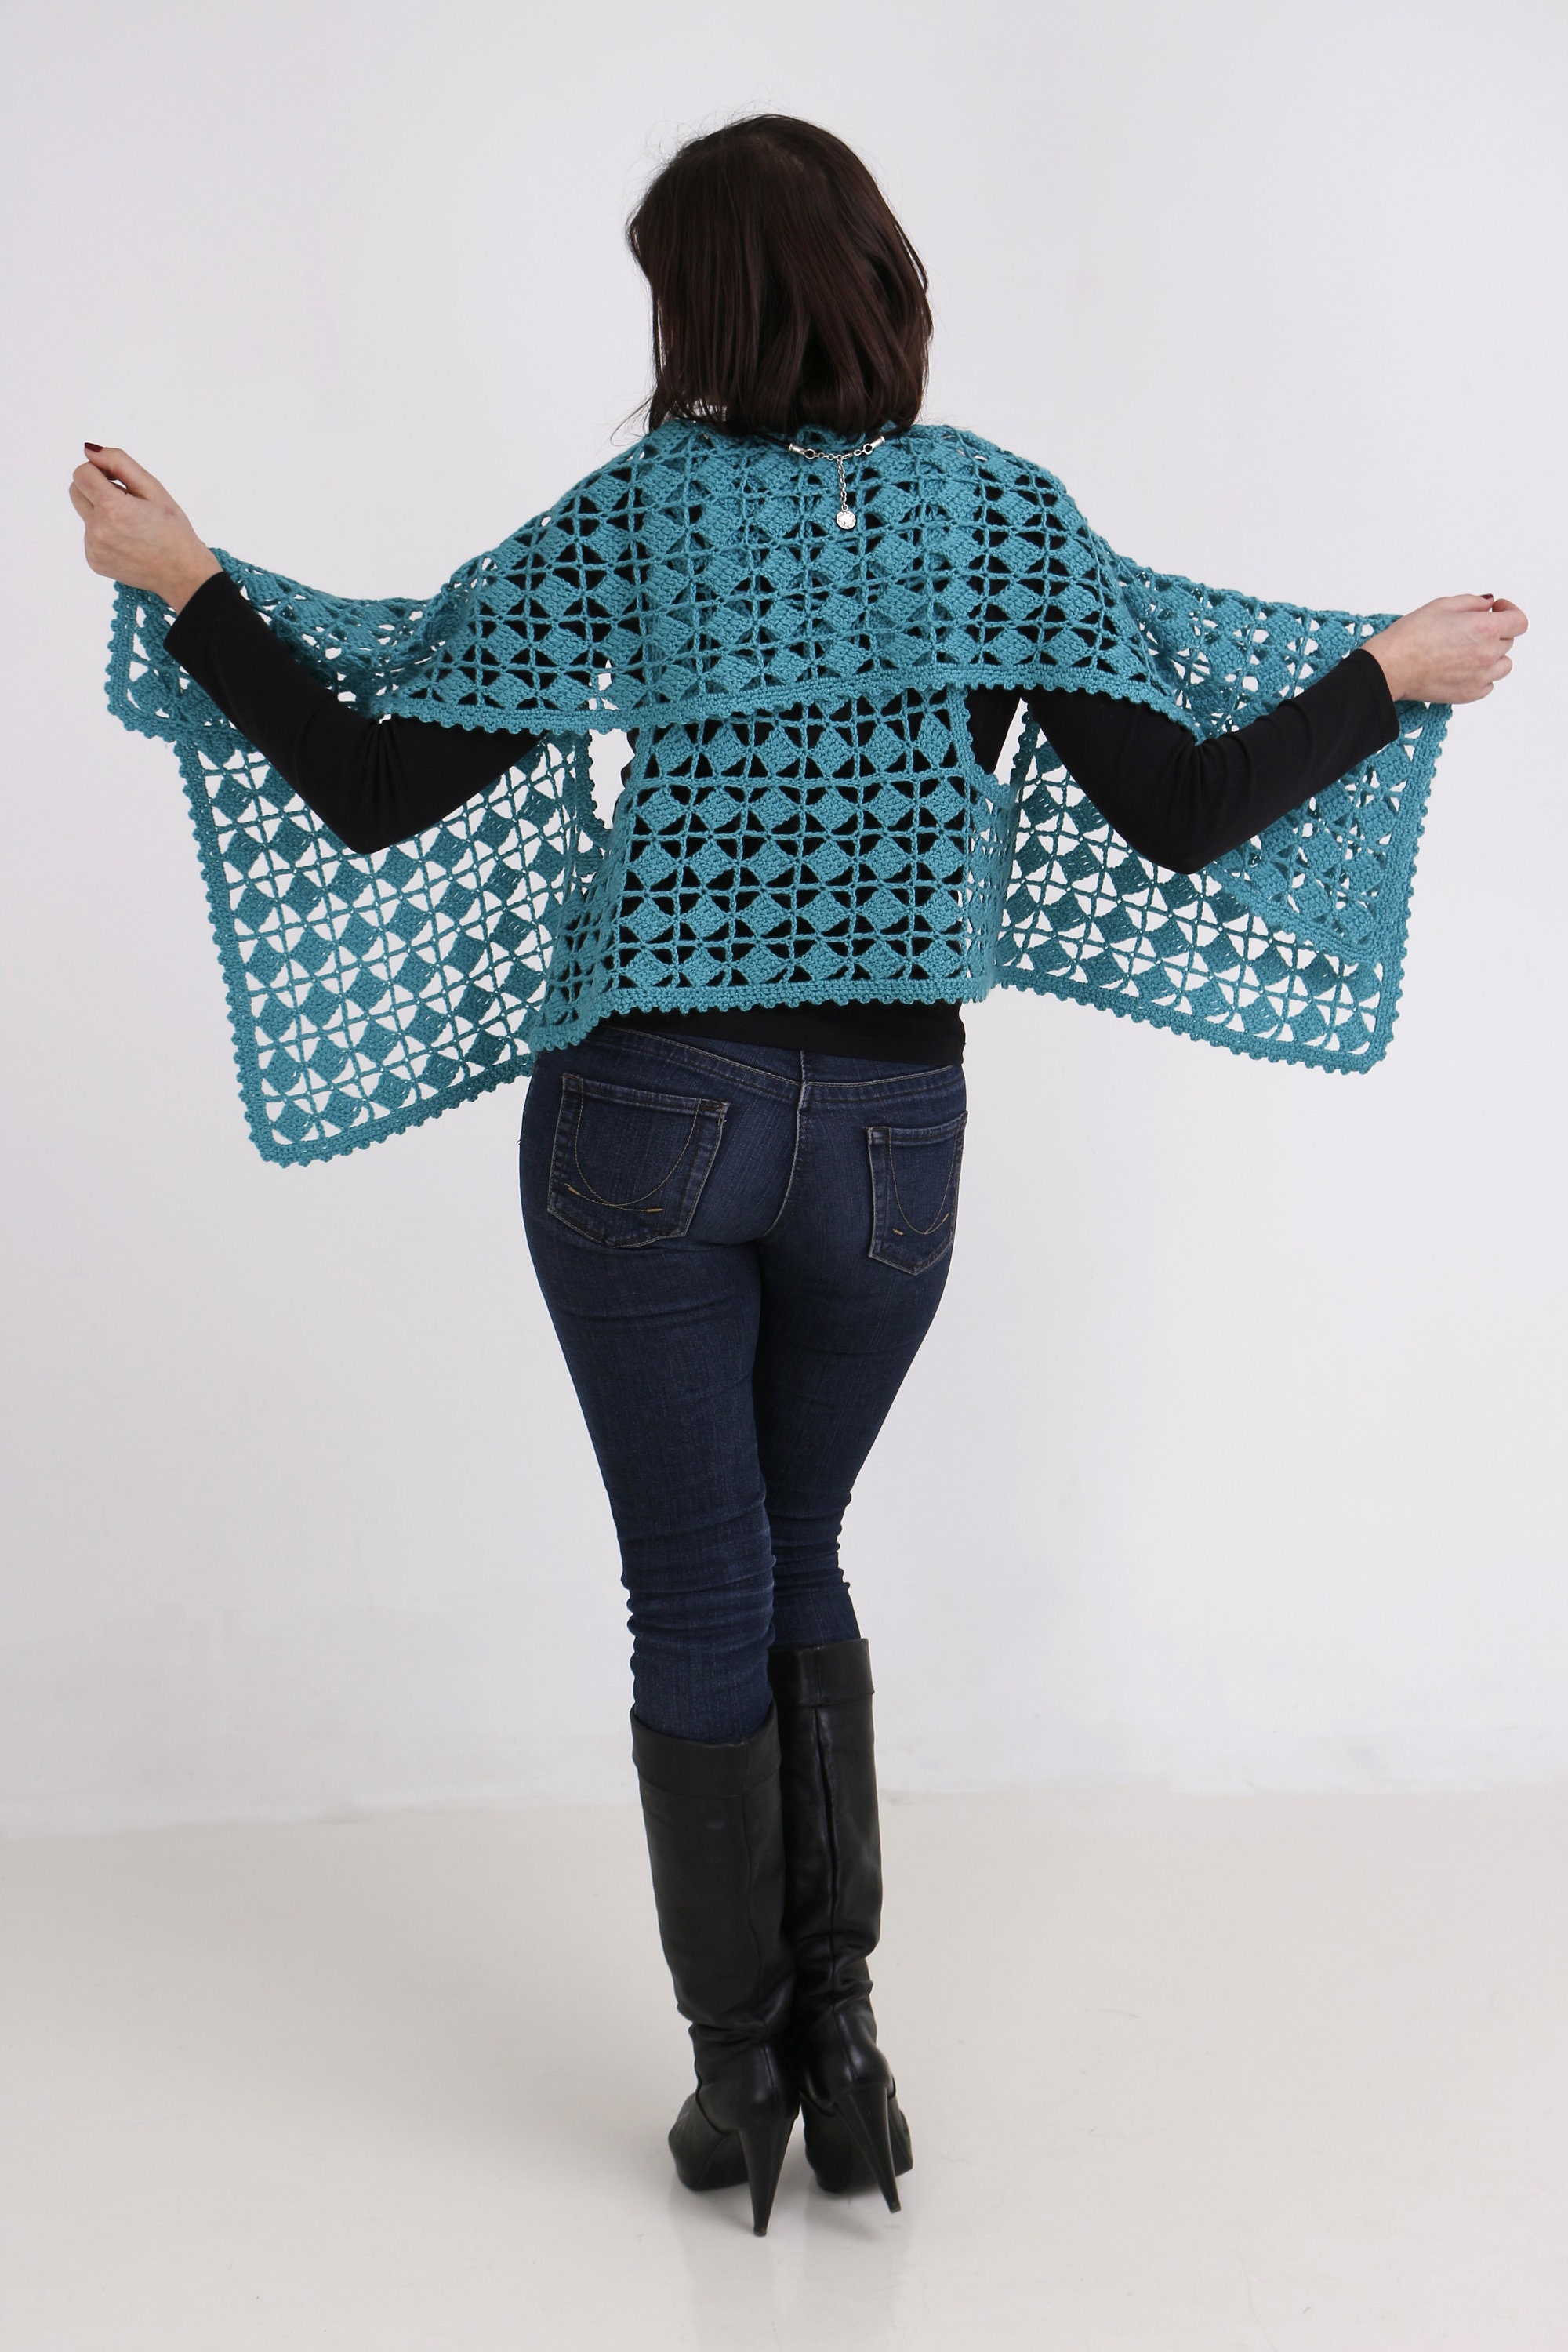 Crochet Vest Rectangle PATTERN Crochet Bolero PDF HQ - Etsy